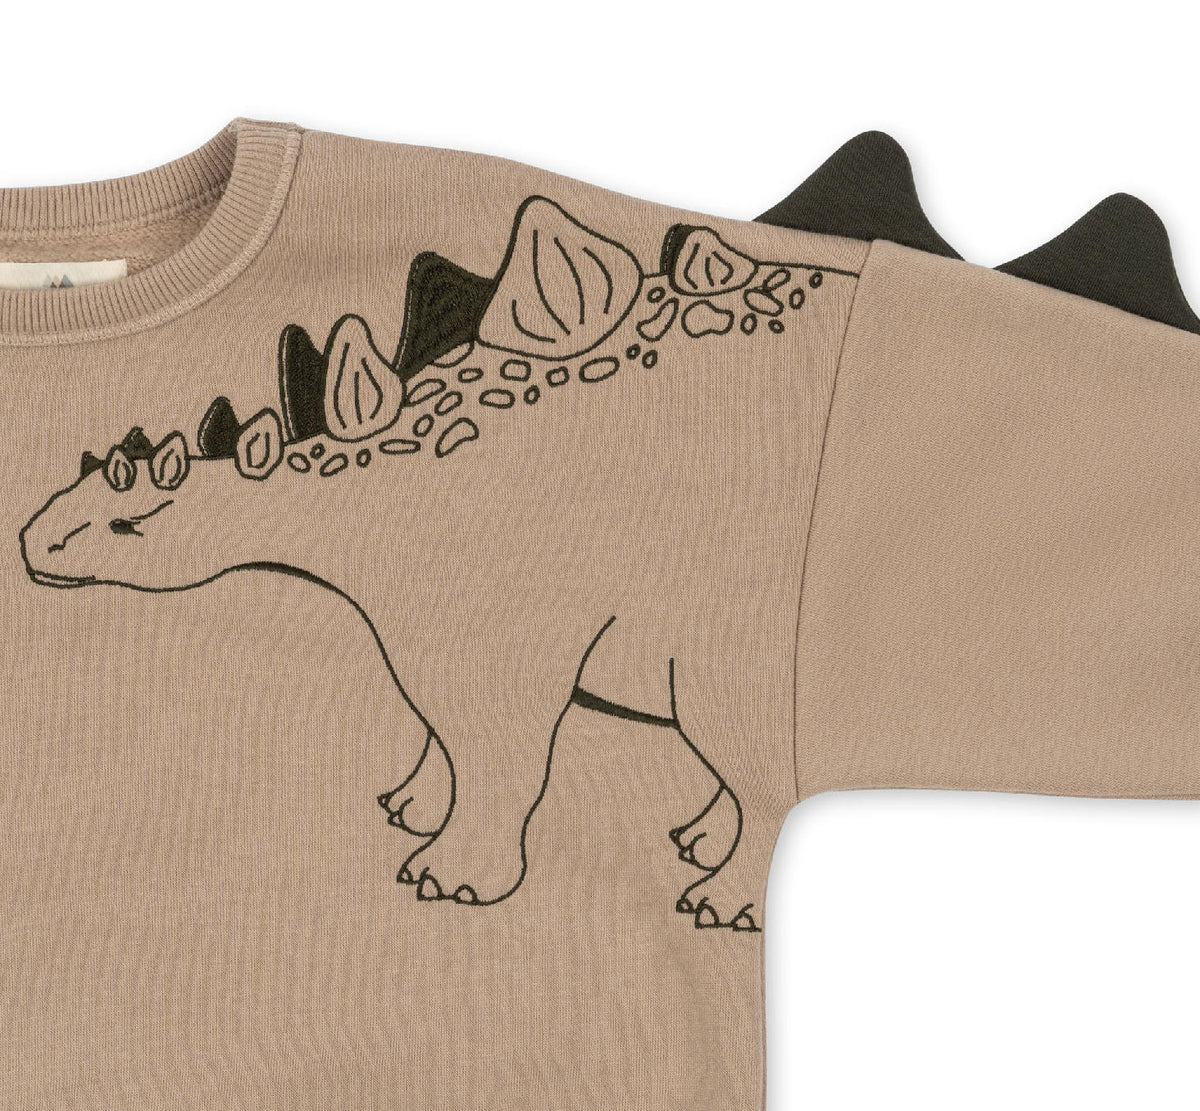 Sweatshirt "Lou Animal Spike Dino / Oxford Tan"